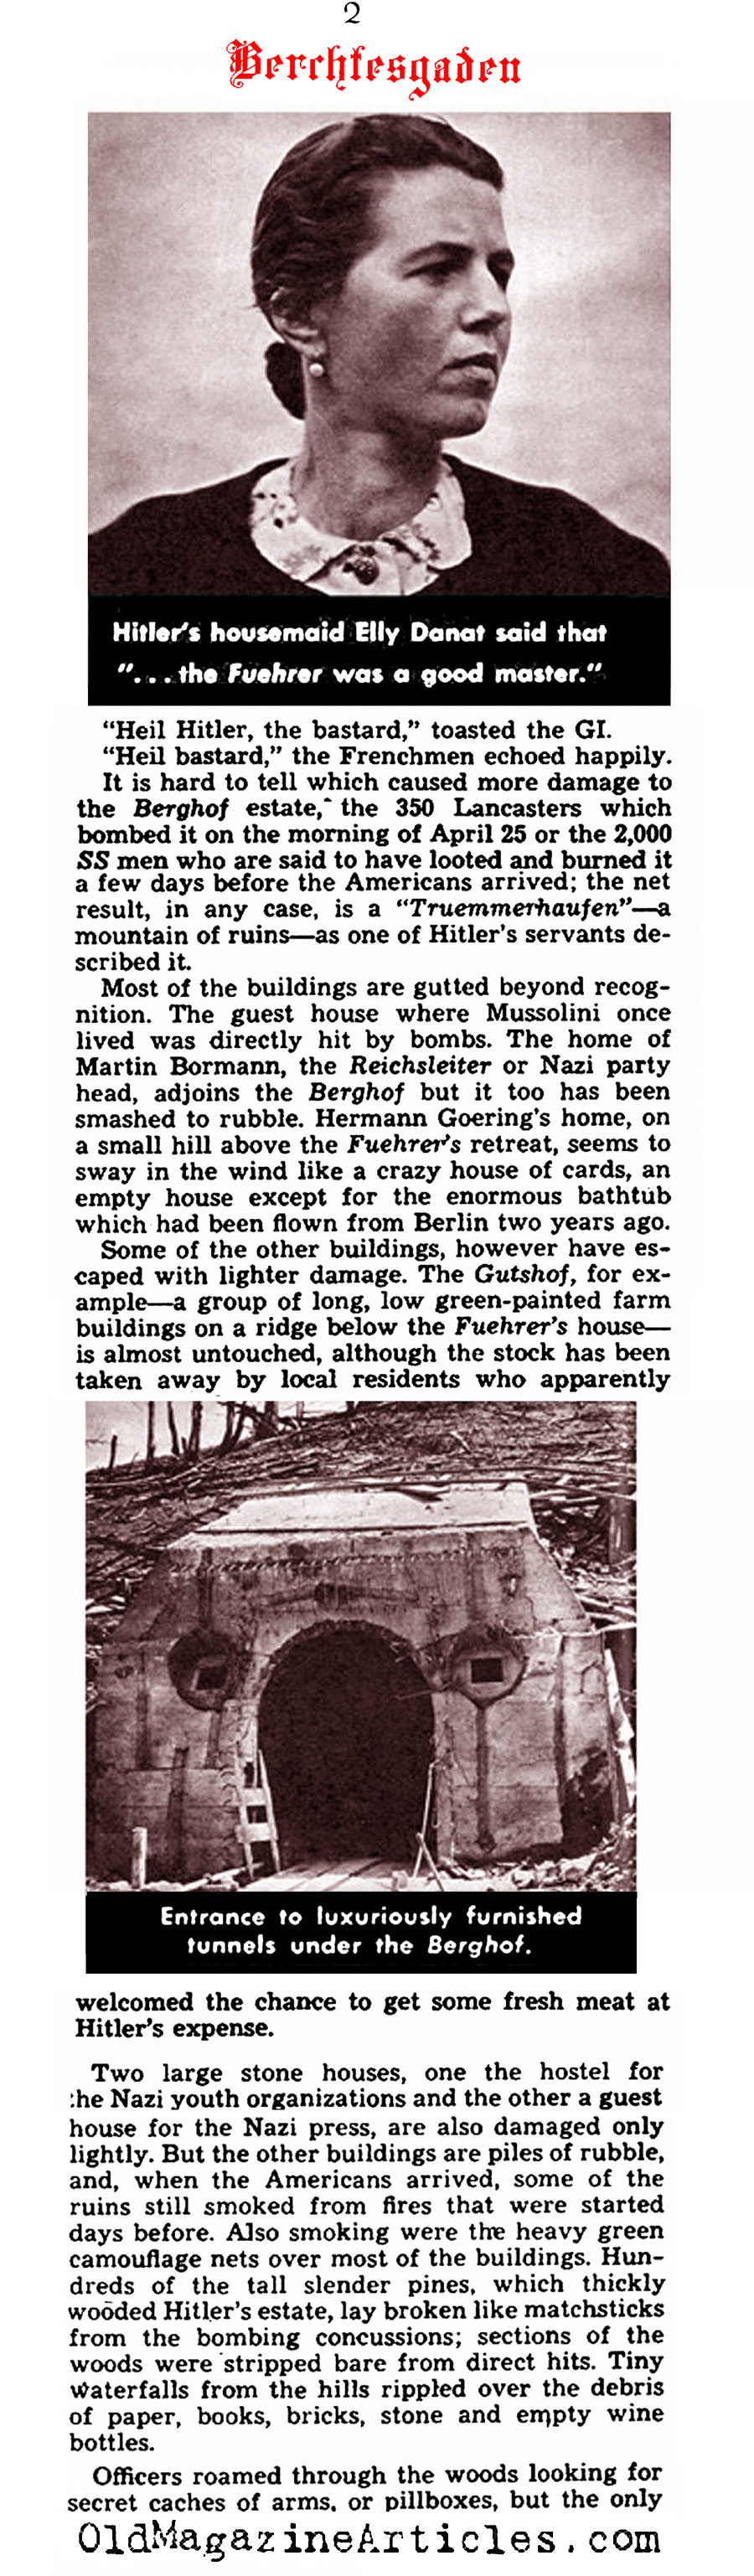 Berchtesgaden: Hitler's Mountain Retreat (Yank Magazine, 1945)